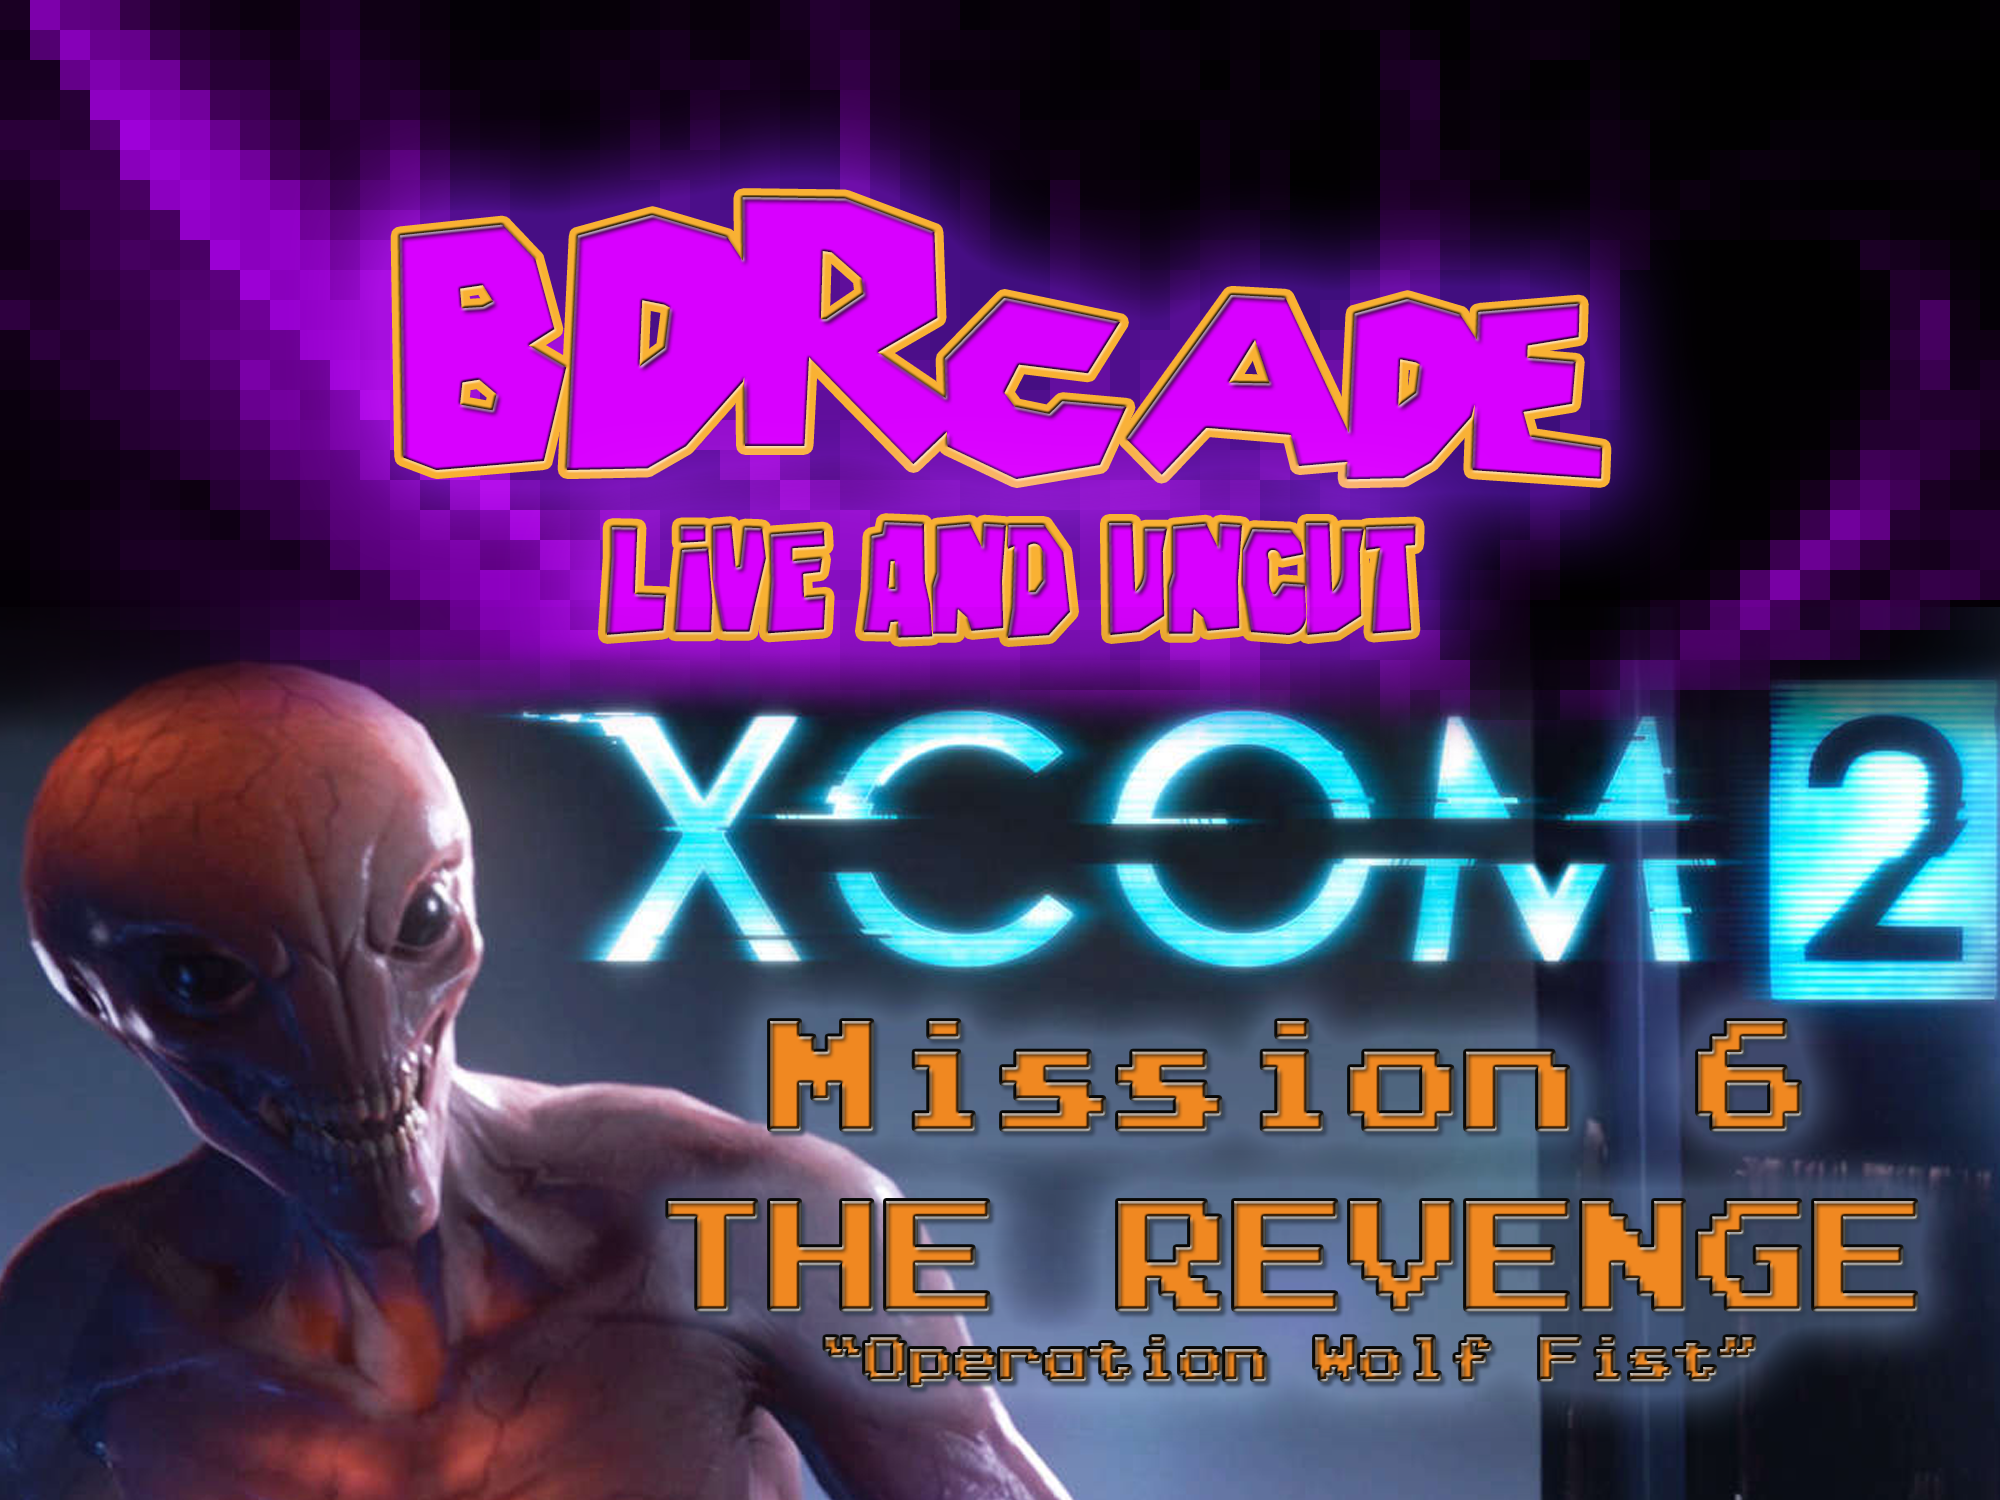 XCOM 2 – Mission 6 THE REVENGE: “Operation Wolf Fist” – A BDRcade Live Stream